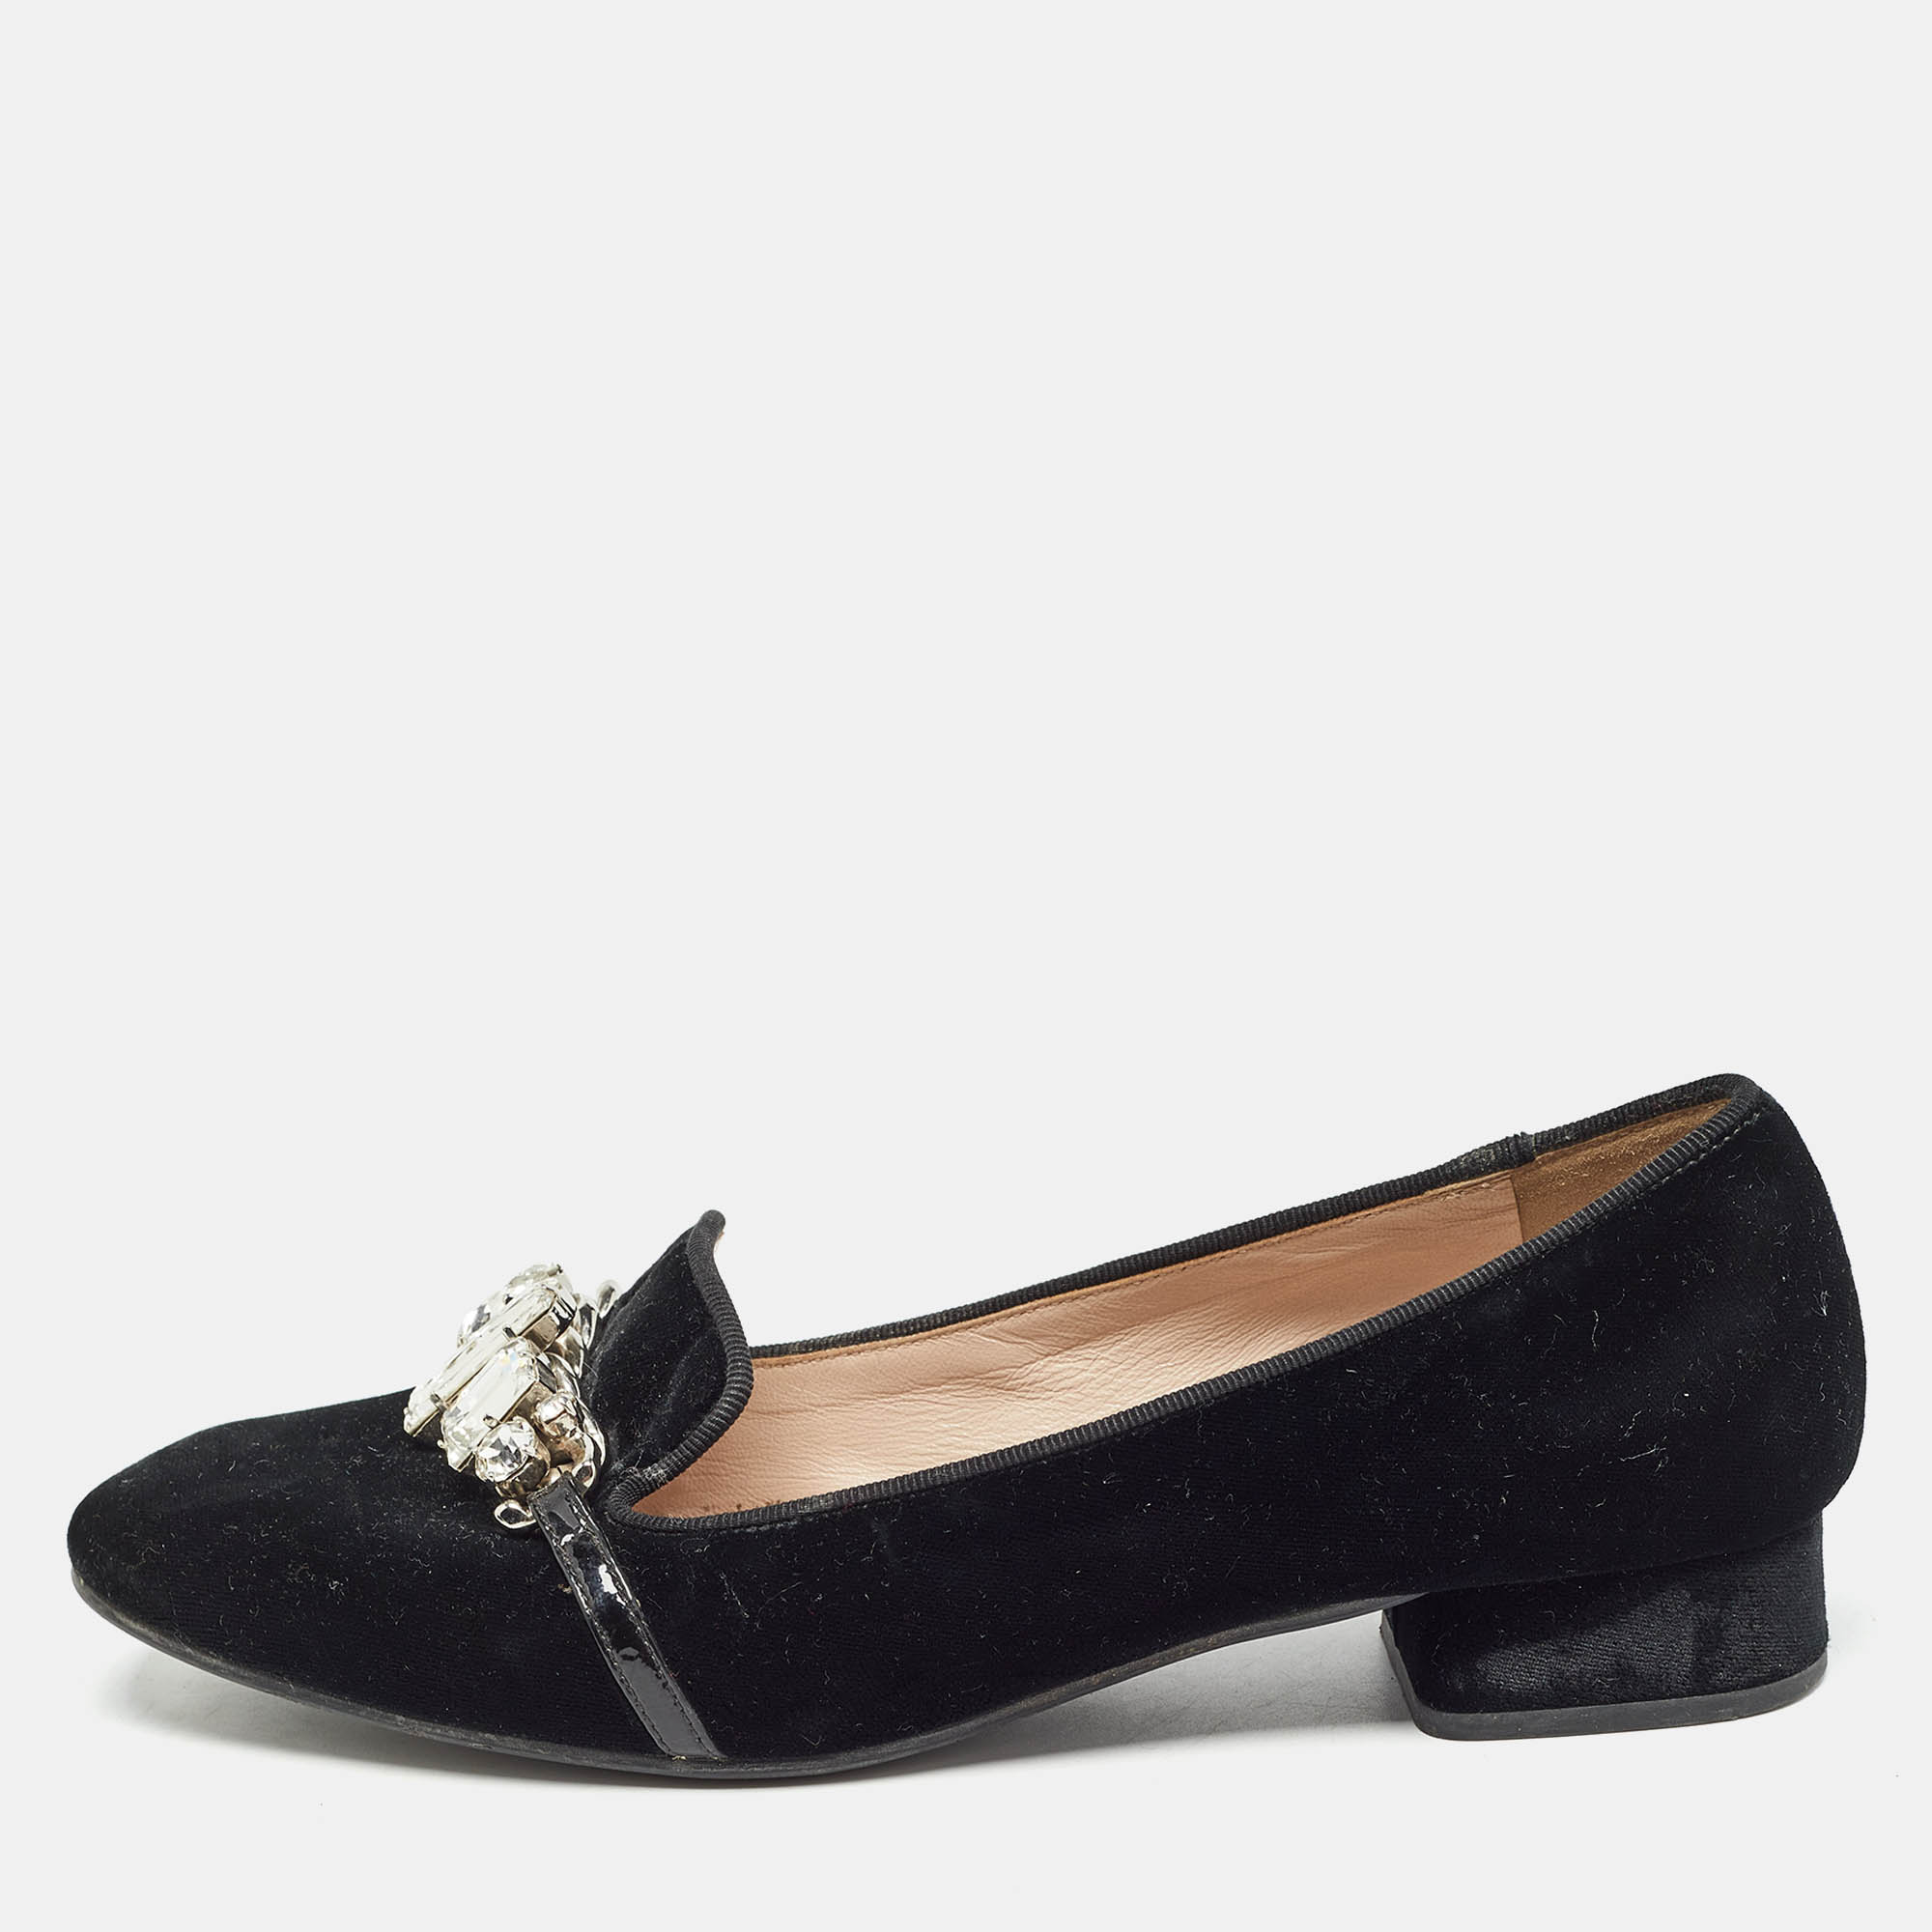 Miu miu black velvet crystal embellished smoking slippers size 37